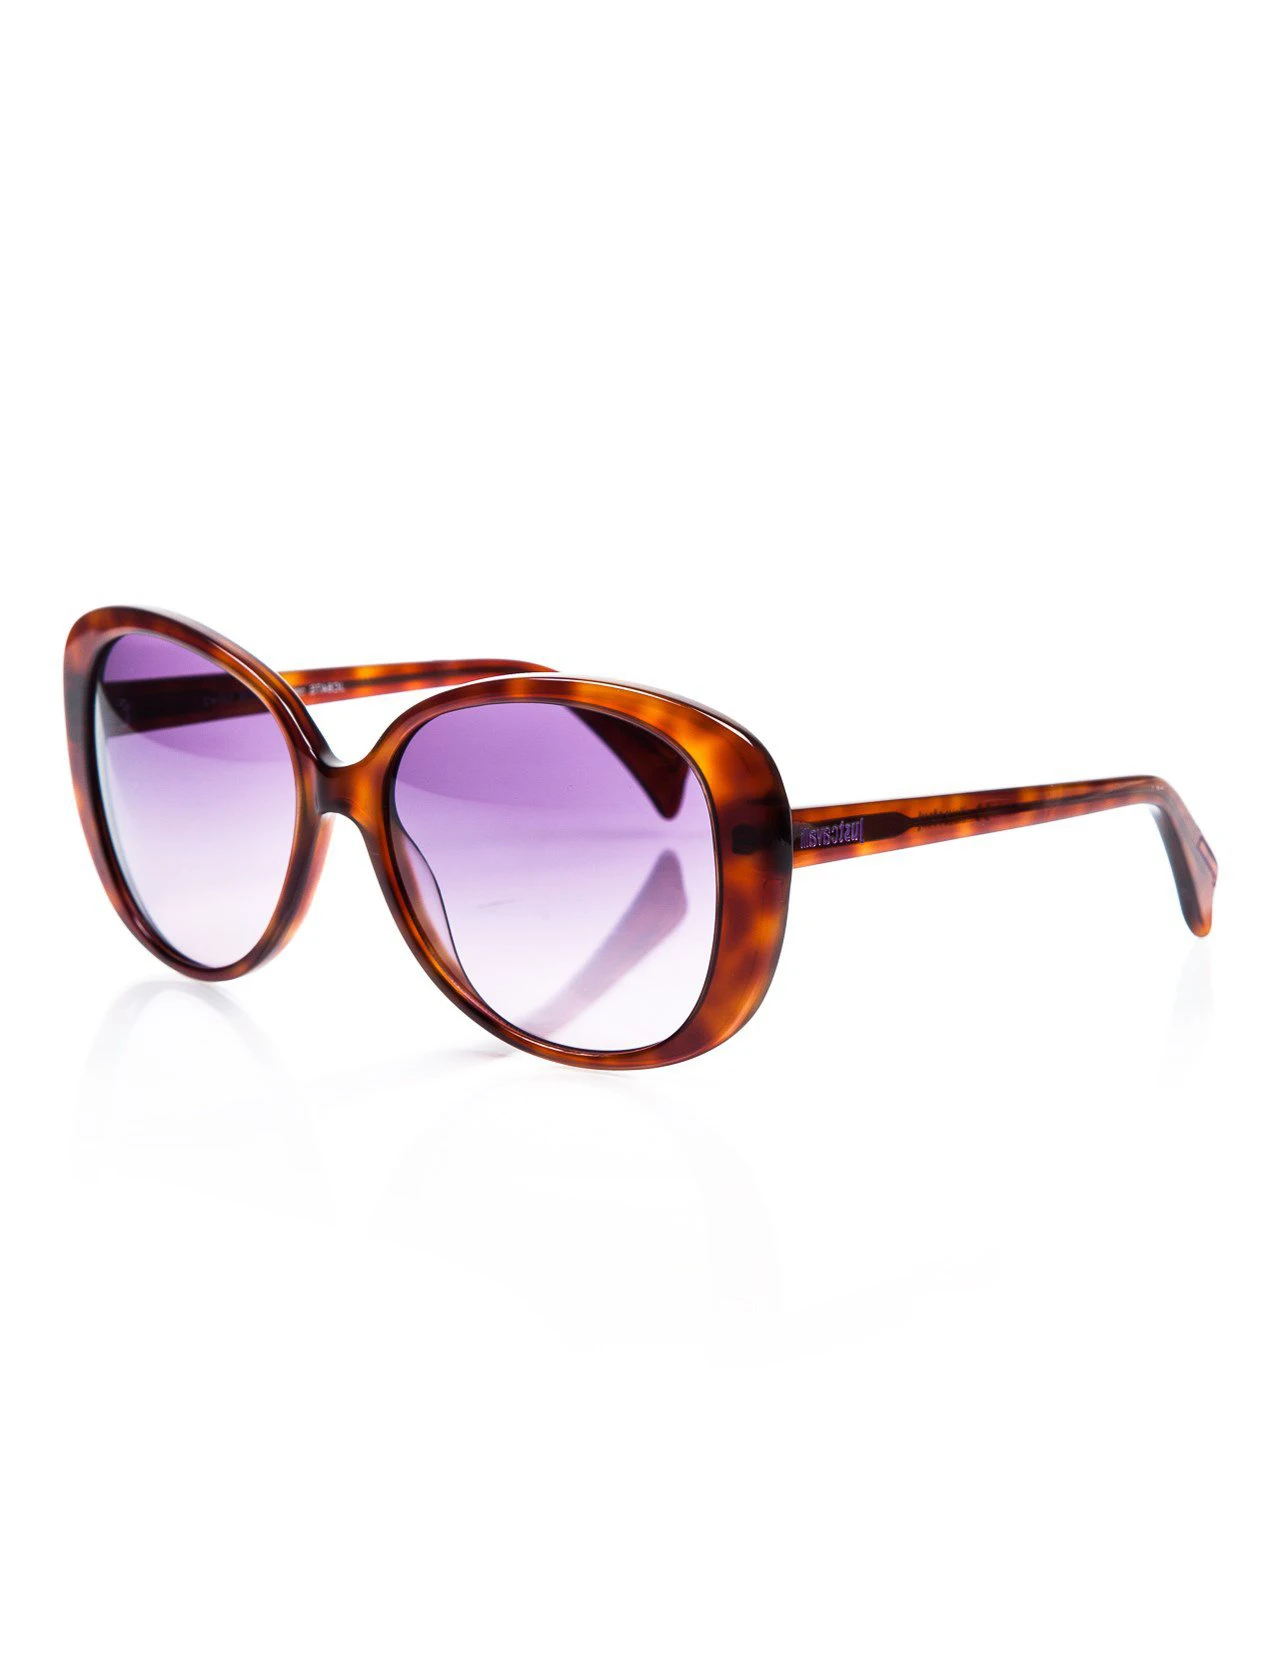 

Women's sunglasses jc 647 53v bone Brown organic oval aval 57-16-135 just cavalli